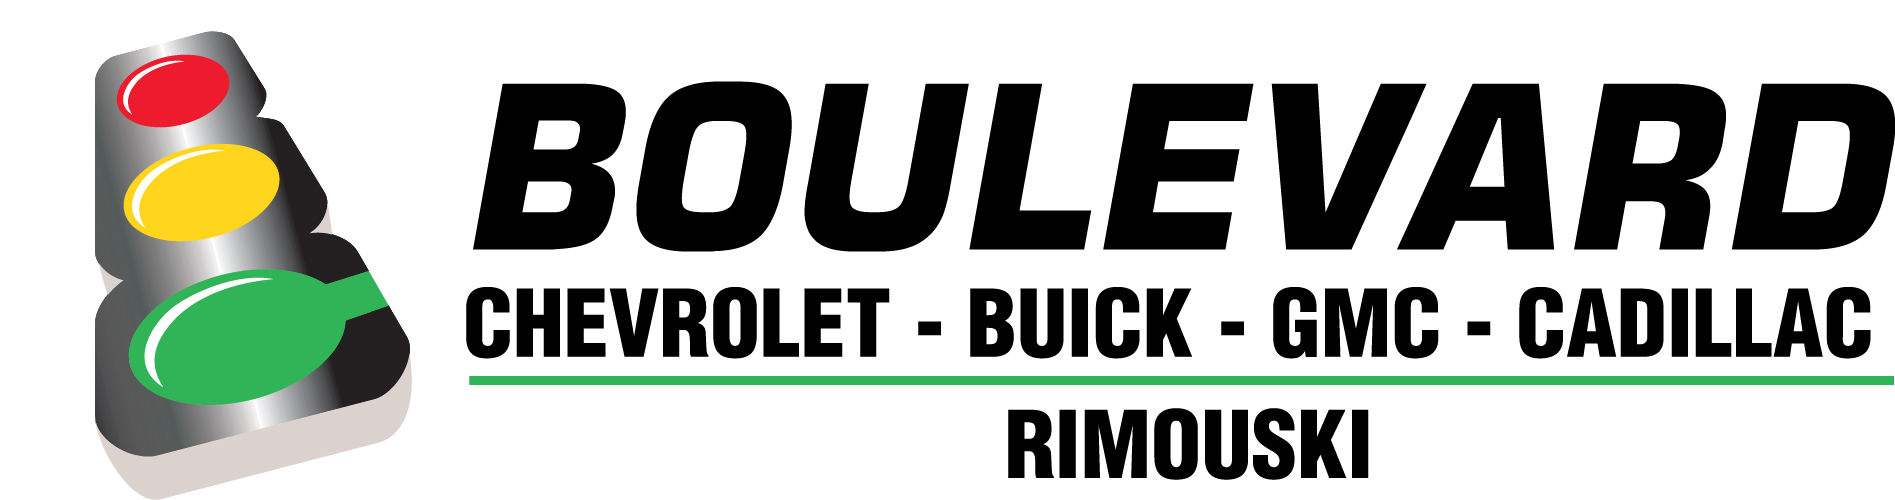 Boulevard Chevrolet Buick GMC Logo